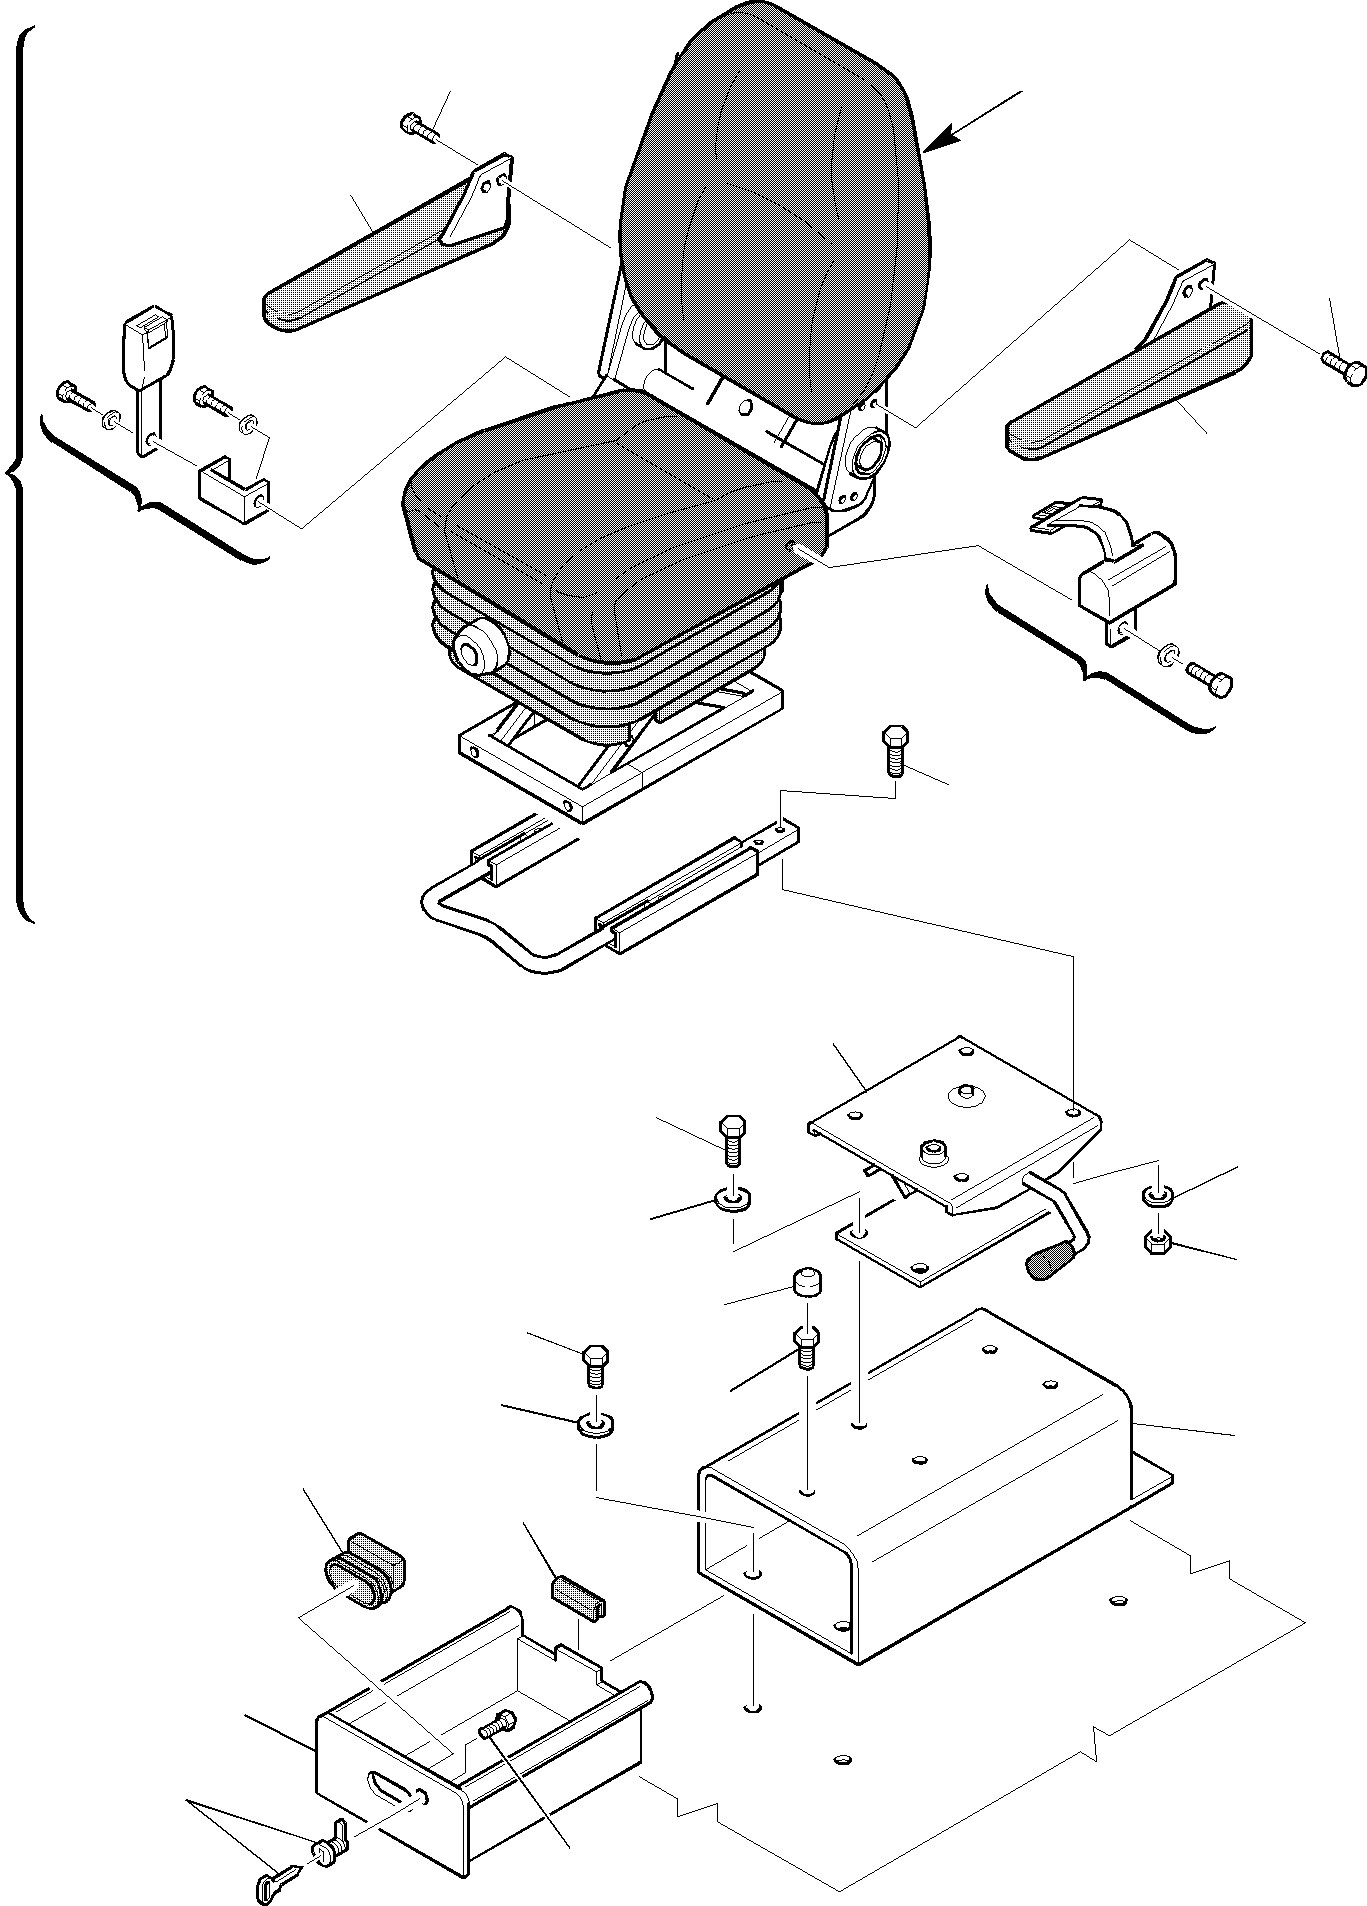 Part 22. OPERATOR'S SEAT (OPTIONAL) (1/2) [5710]